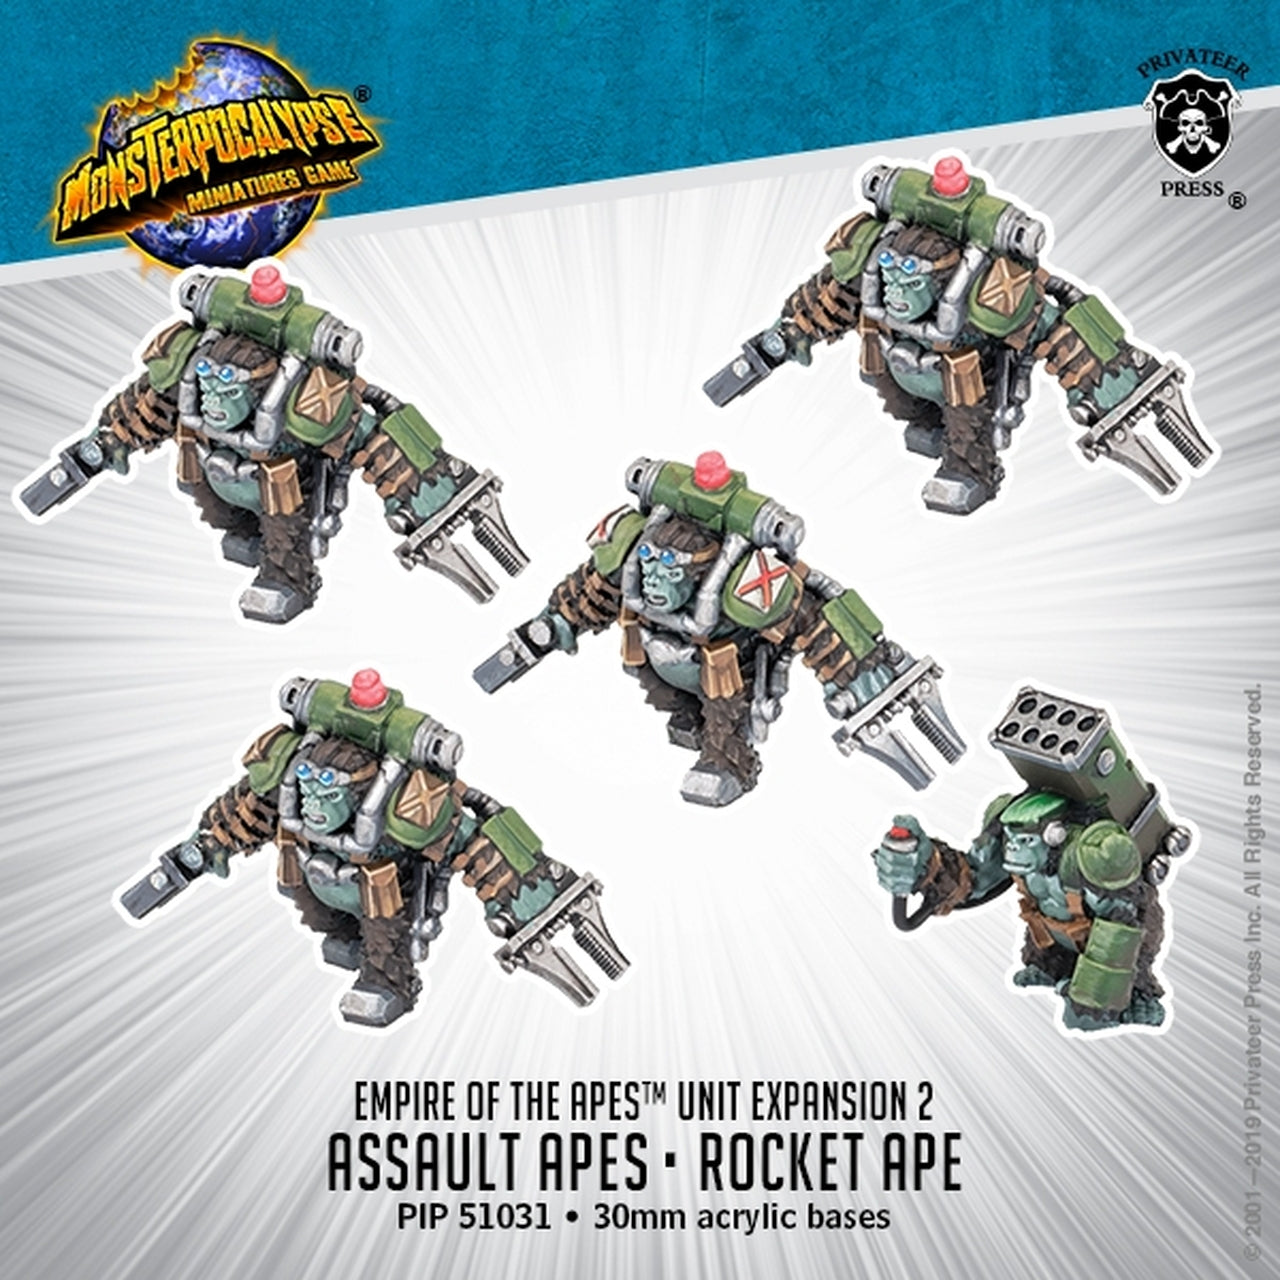 Monsterpocalypse - Empire of the Apes Unit: Assault Apes & Rocket Ape - Bards & Cards